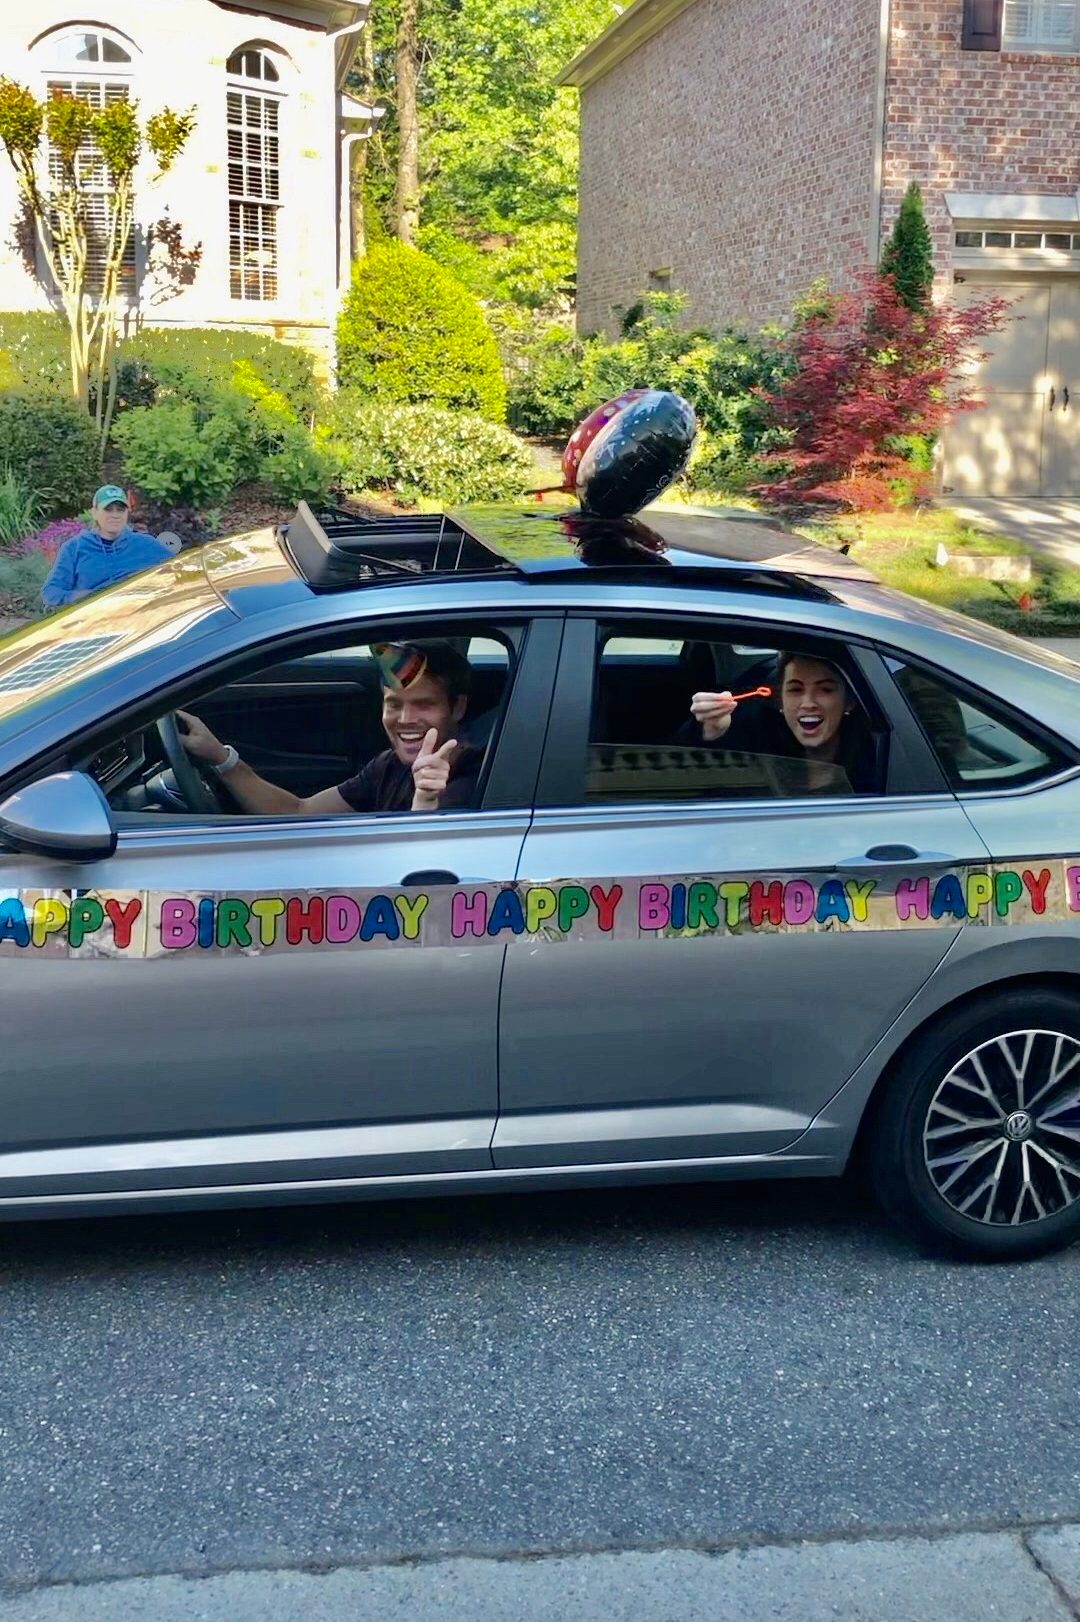 birthday drive by parade